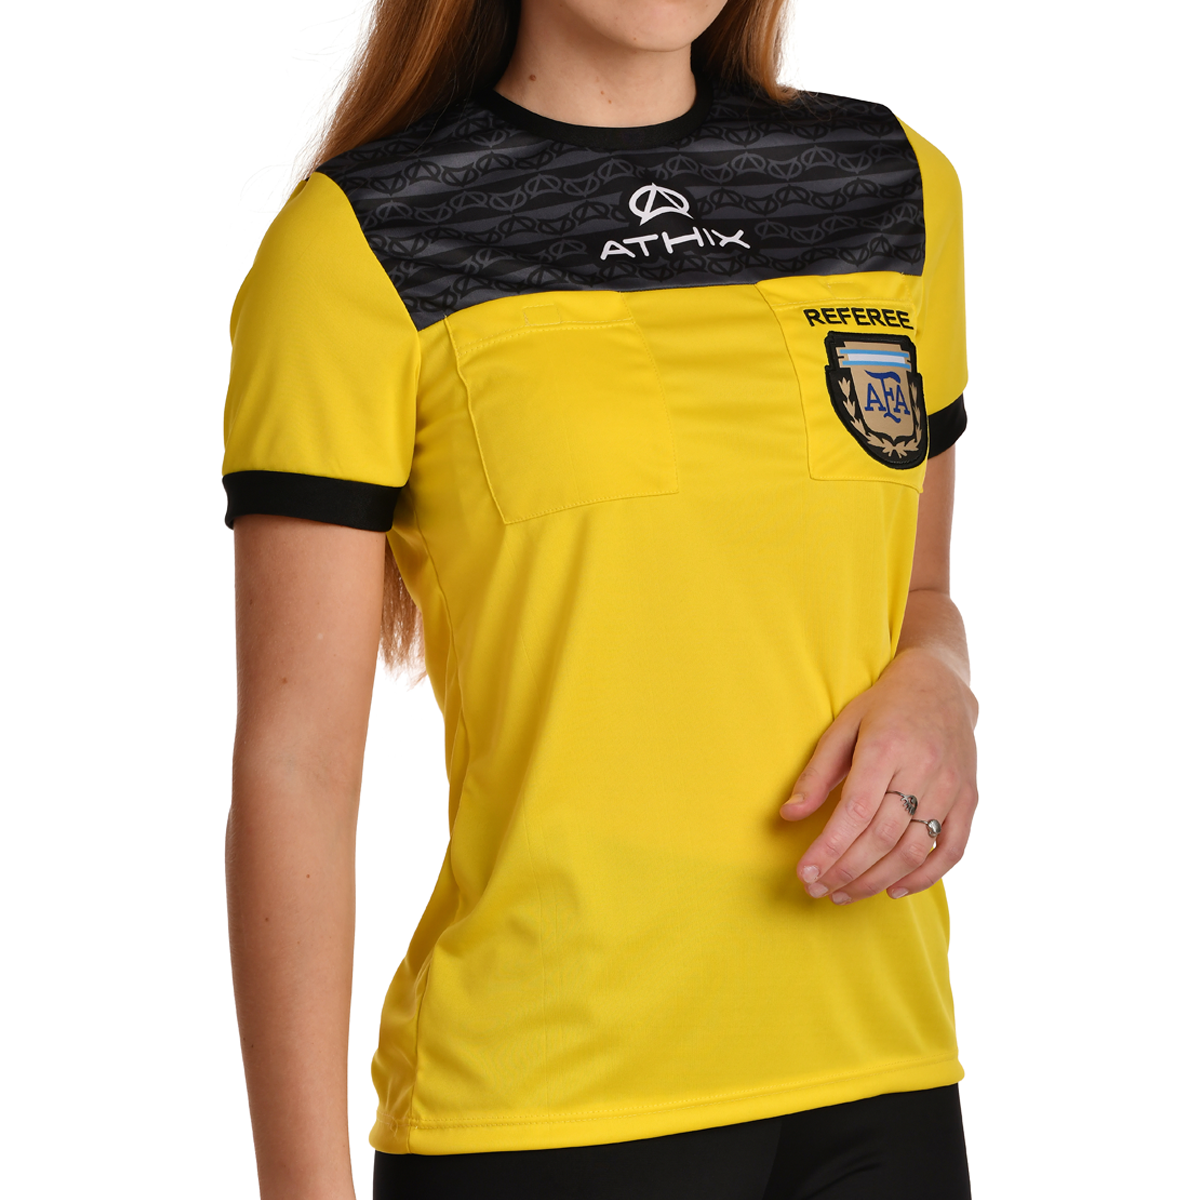 Camiseta árbitro 22 - Amarillo adidas